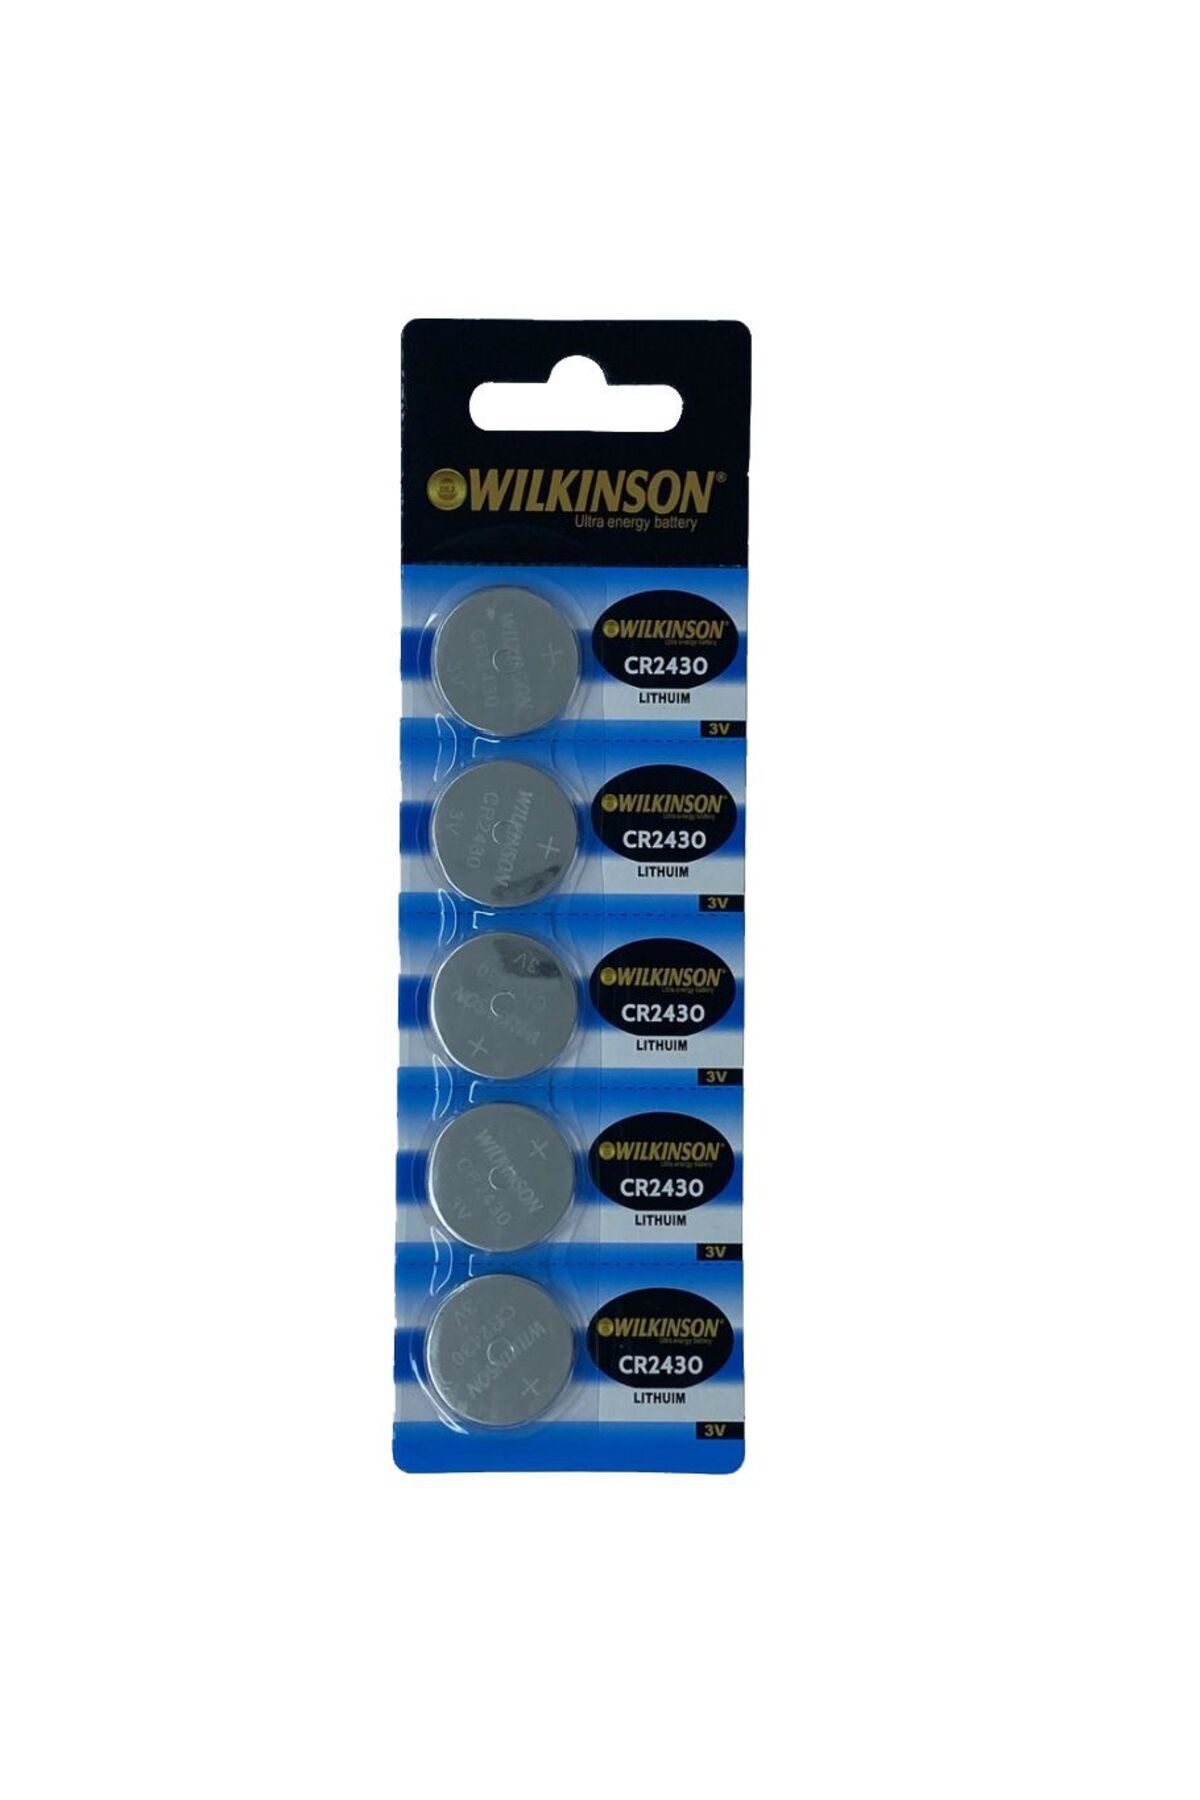 Skygo WILKINSON 2430 3V Lityum Düğme Pil 5'li Paket